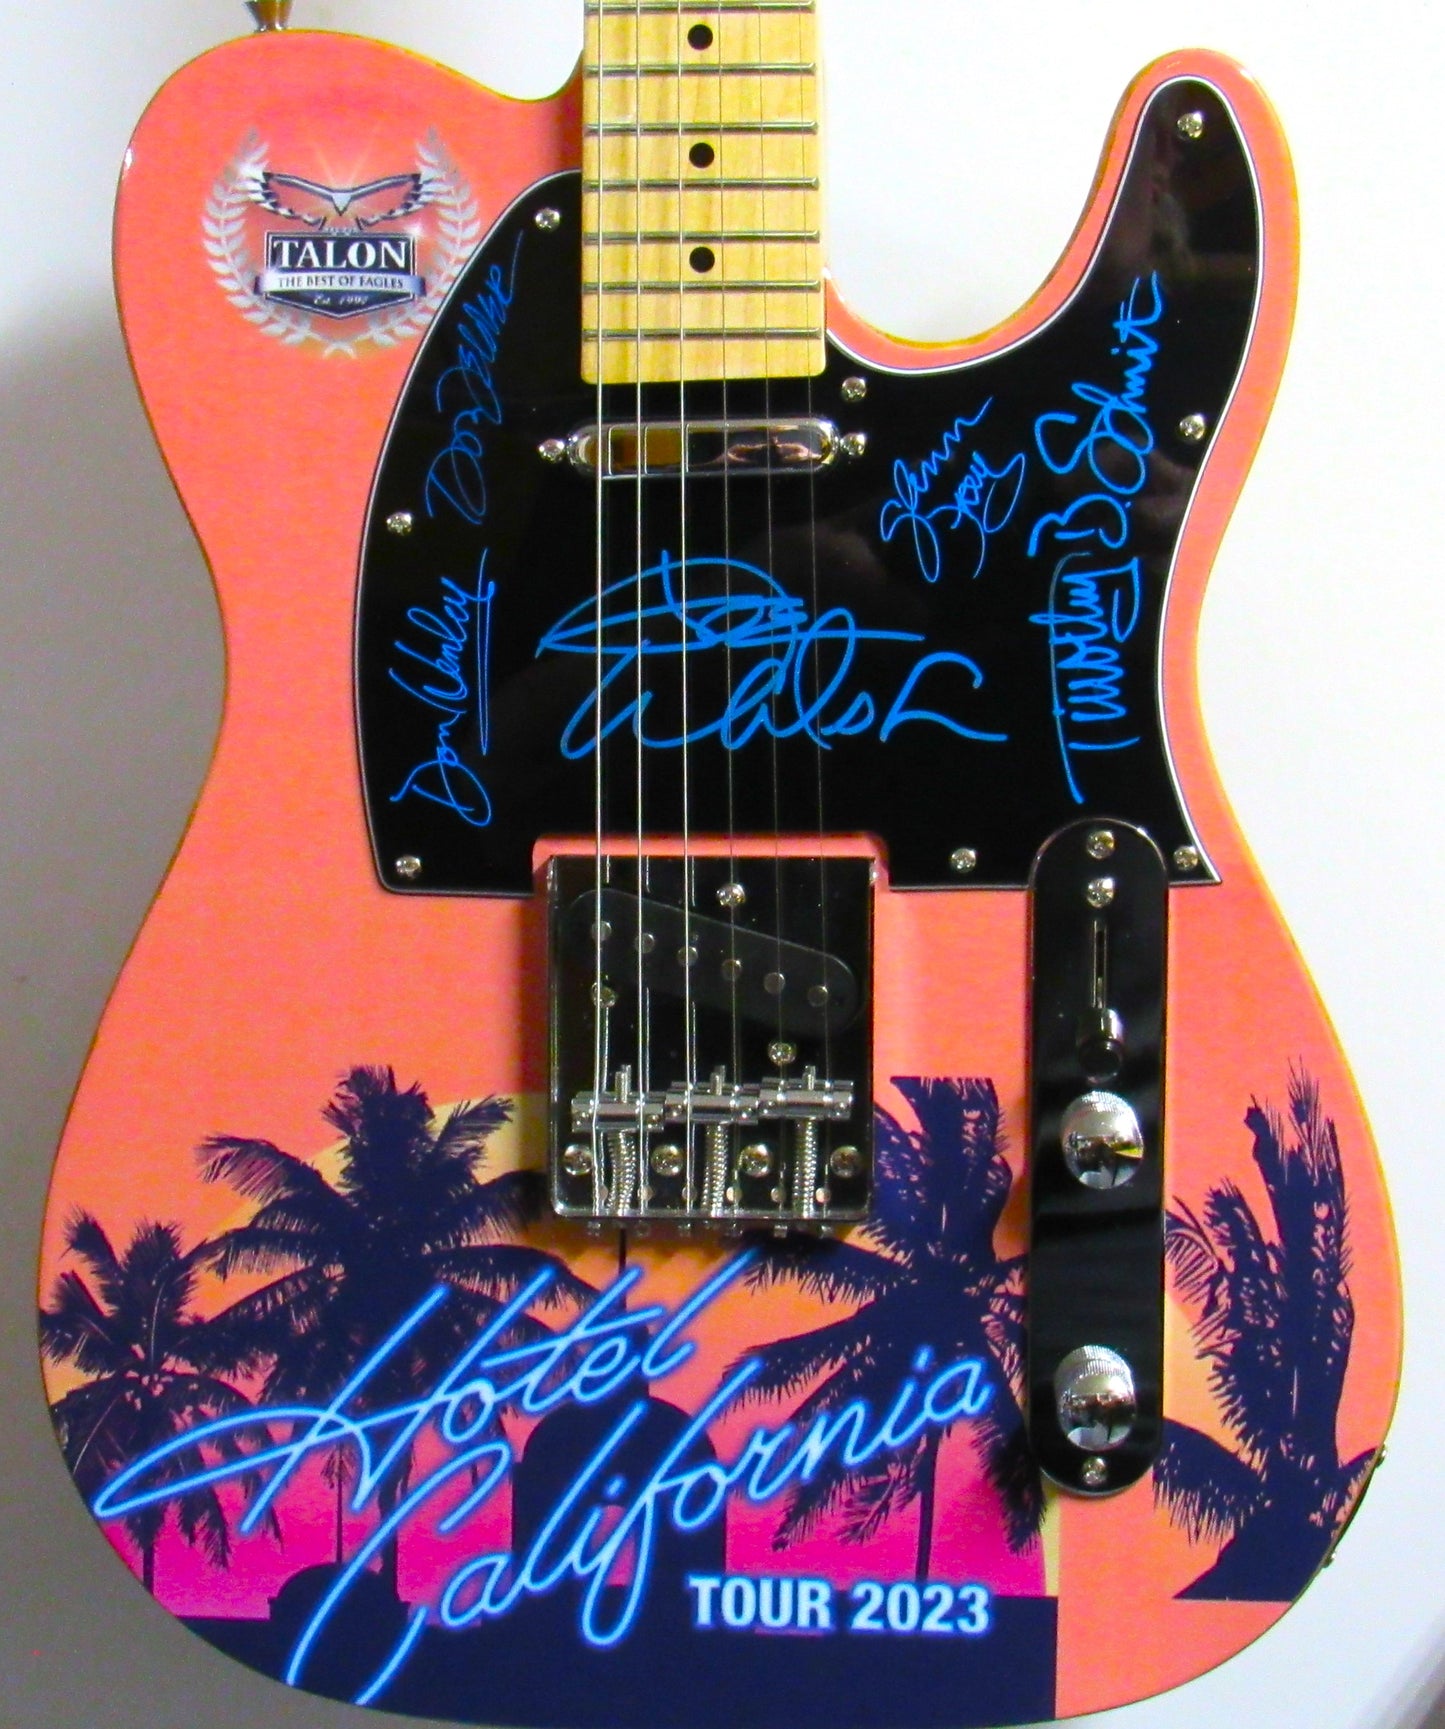 Eagles Autographed Guitar - Zion Graphic Collectibles